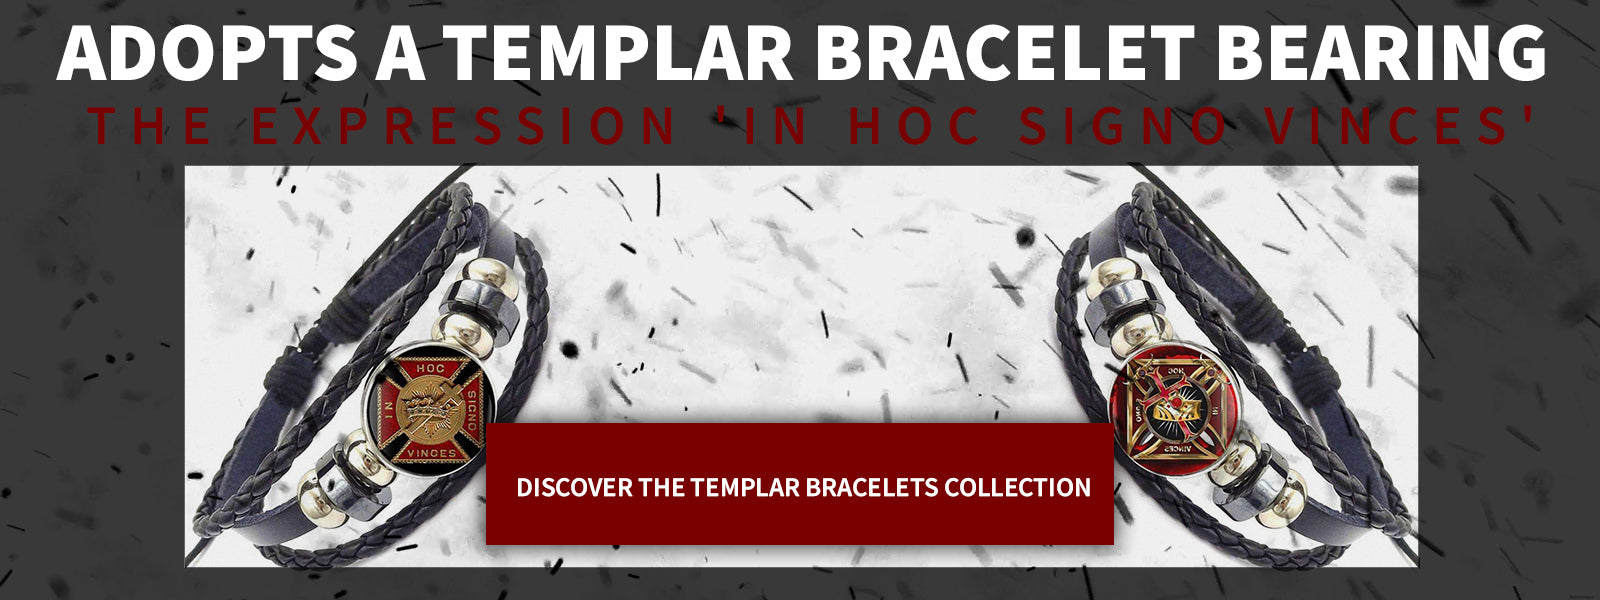 Knights Templar Bracelets